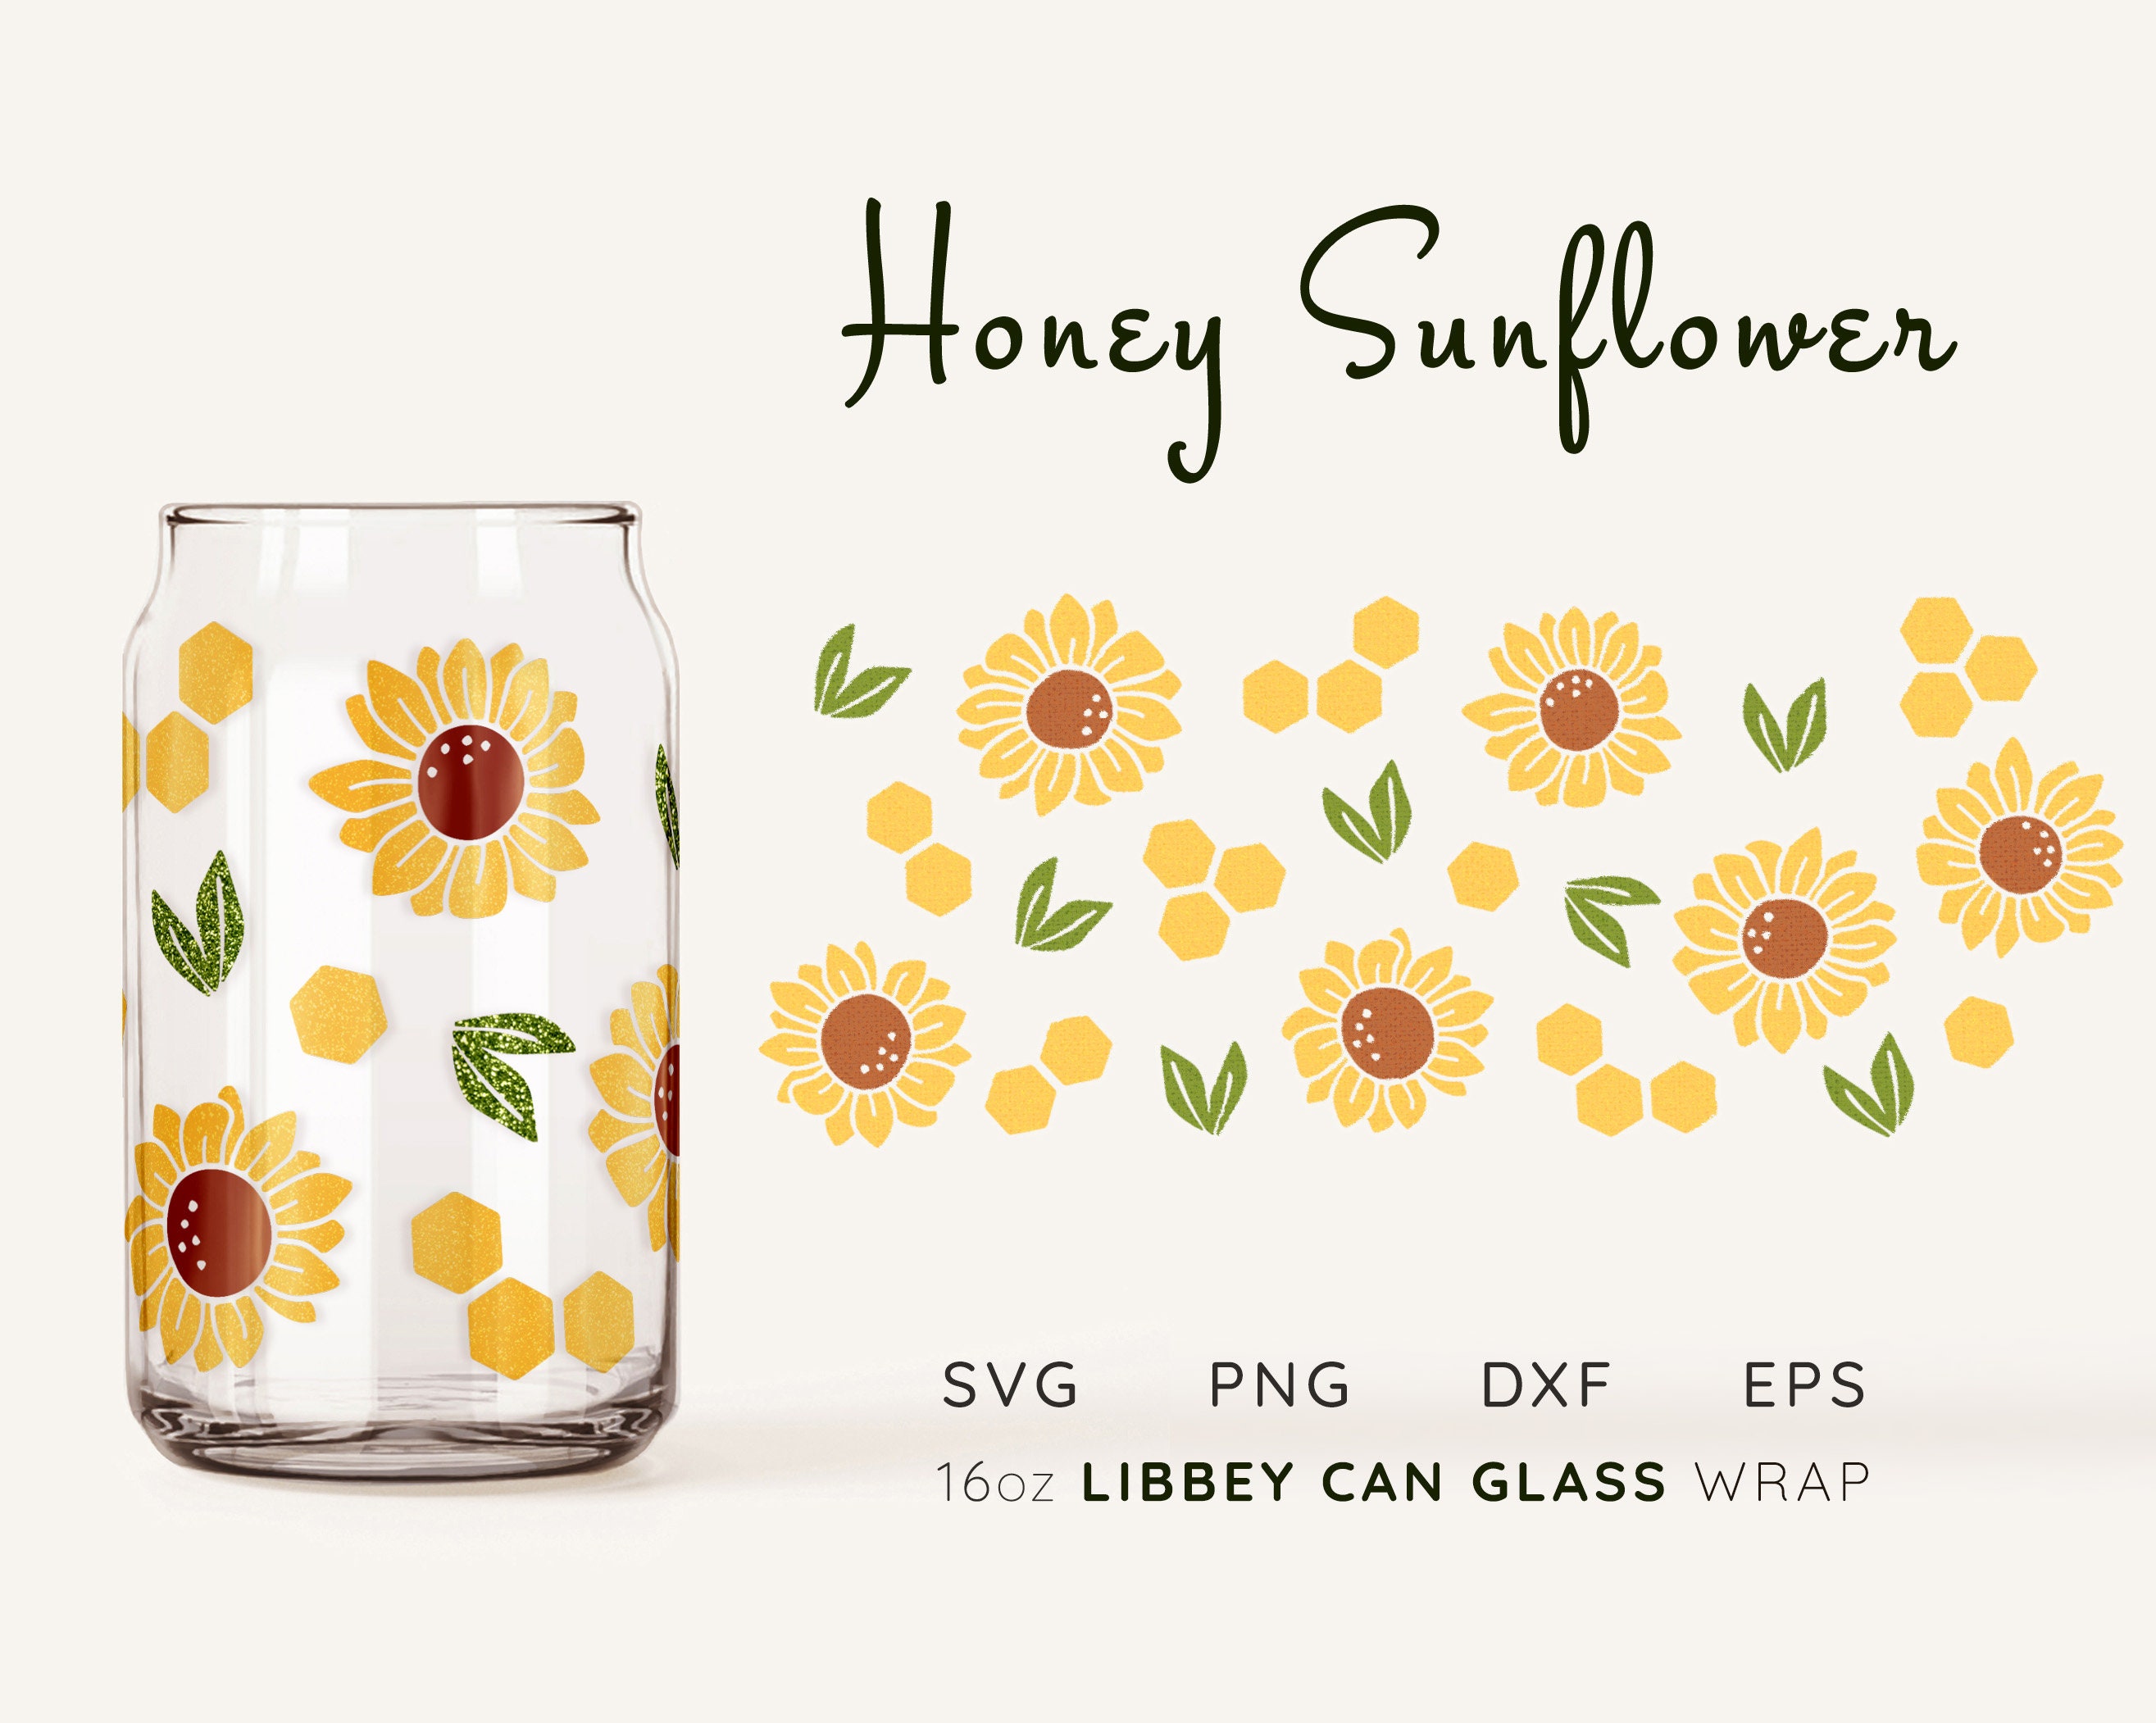 Sunflowers UVDTF Libbey Glass Wrap - UV153 – Vinyl Fun